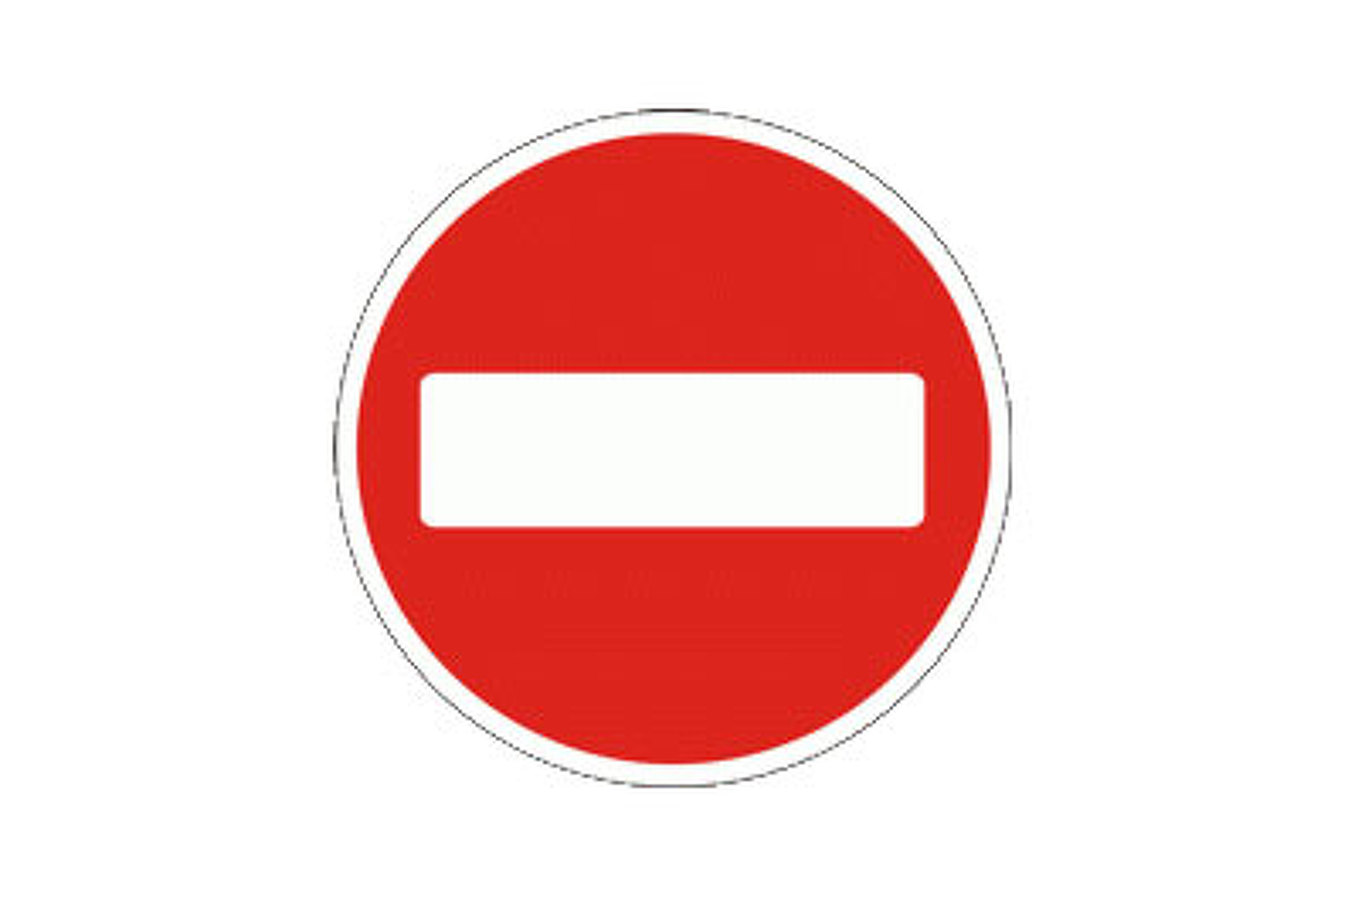 Без запрета въезда. Знак кирпич. Знаки дорожного движения кирпич. Знаки дорожные заезд запрещён. Знак кирпич картинка.